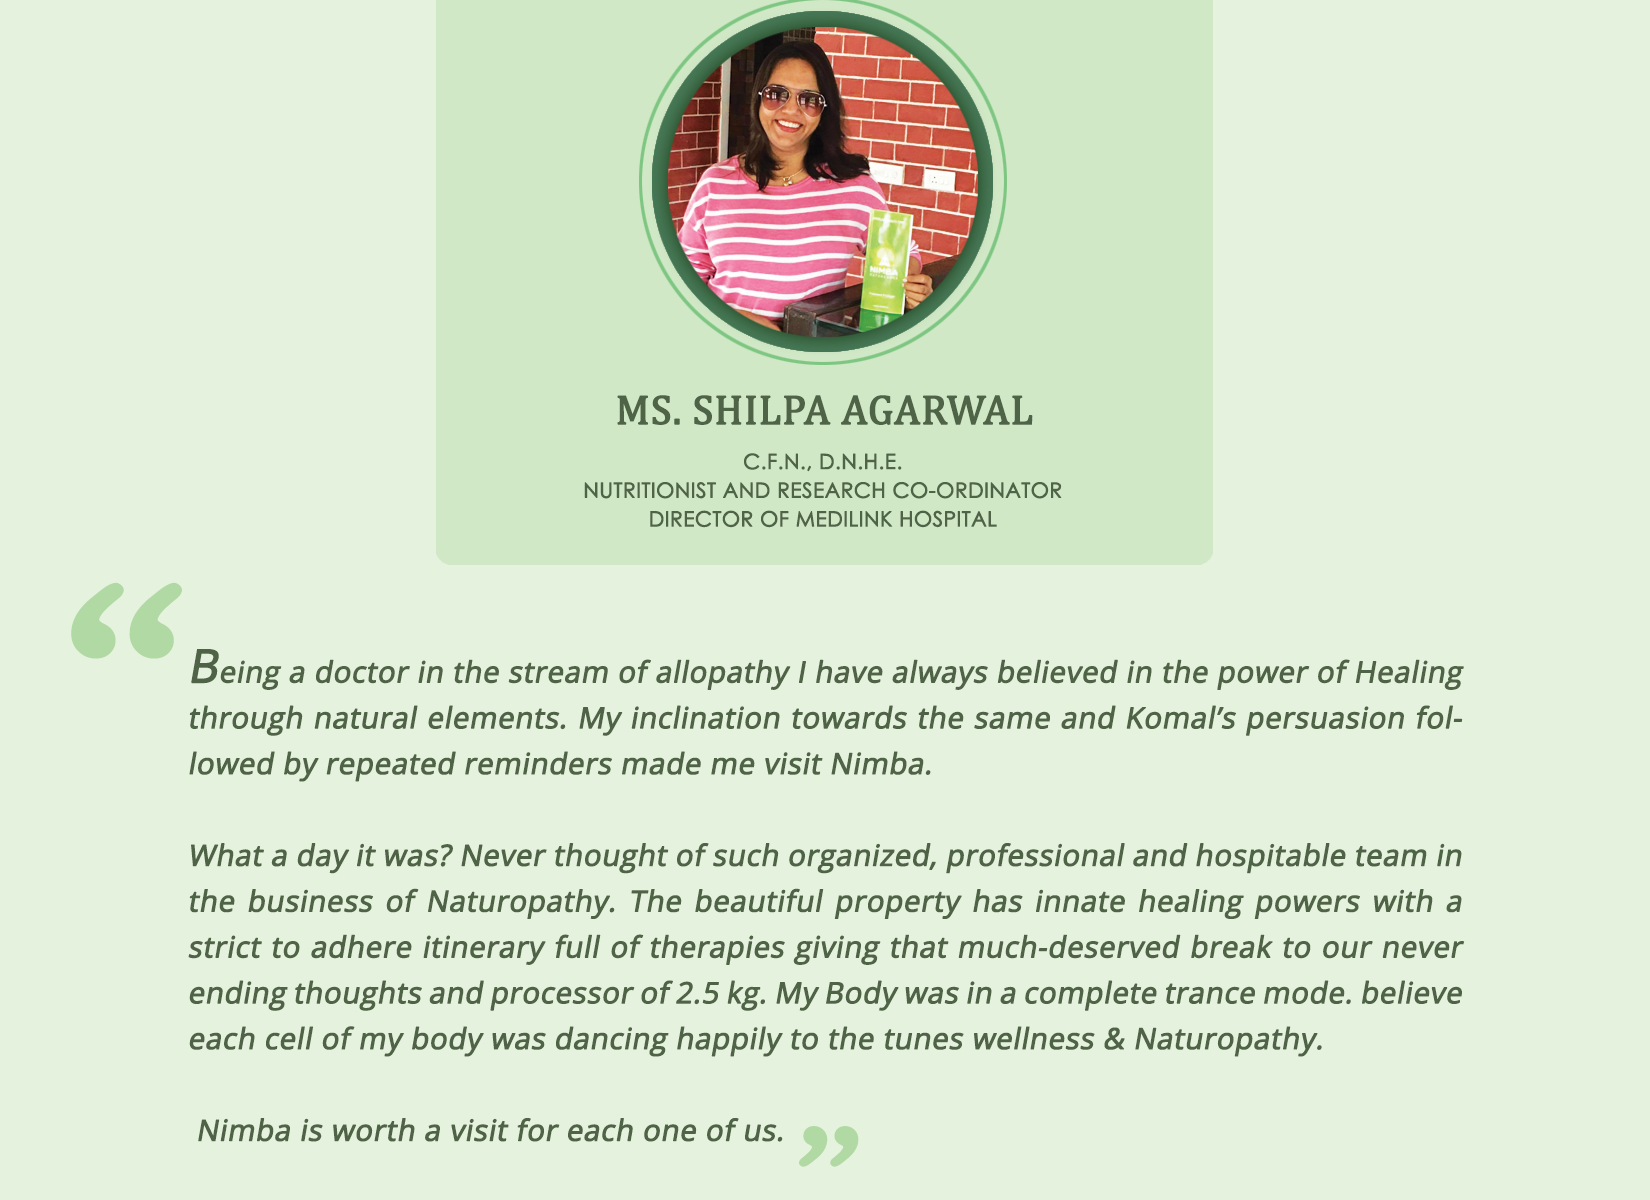 Shilpa Agarwal experienced Naturopathy